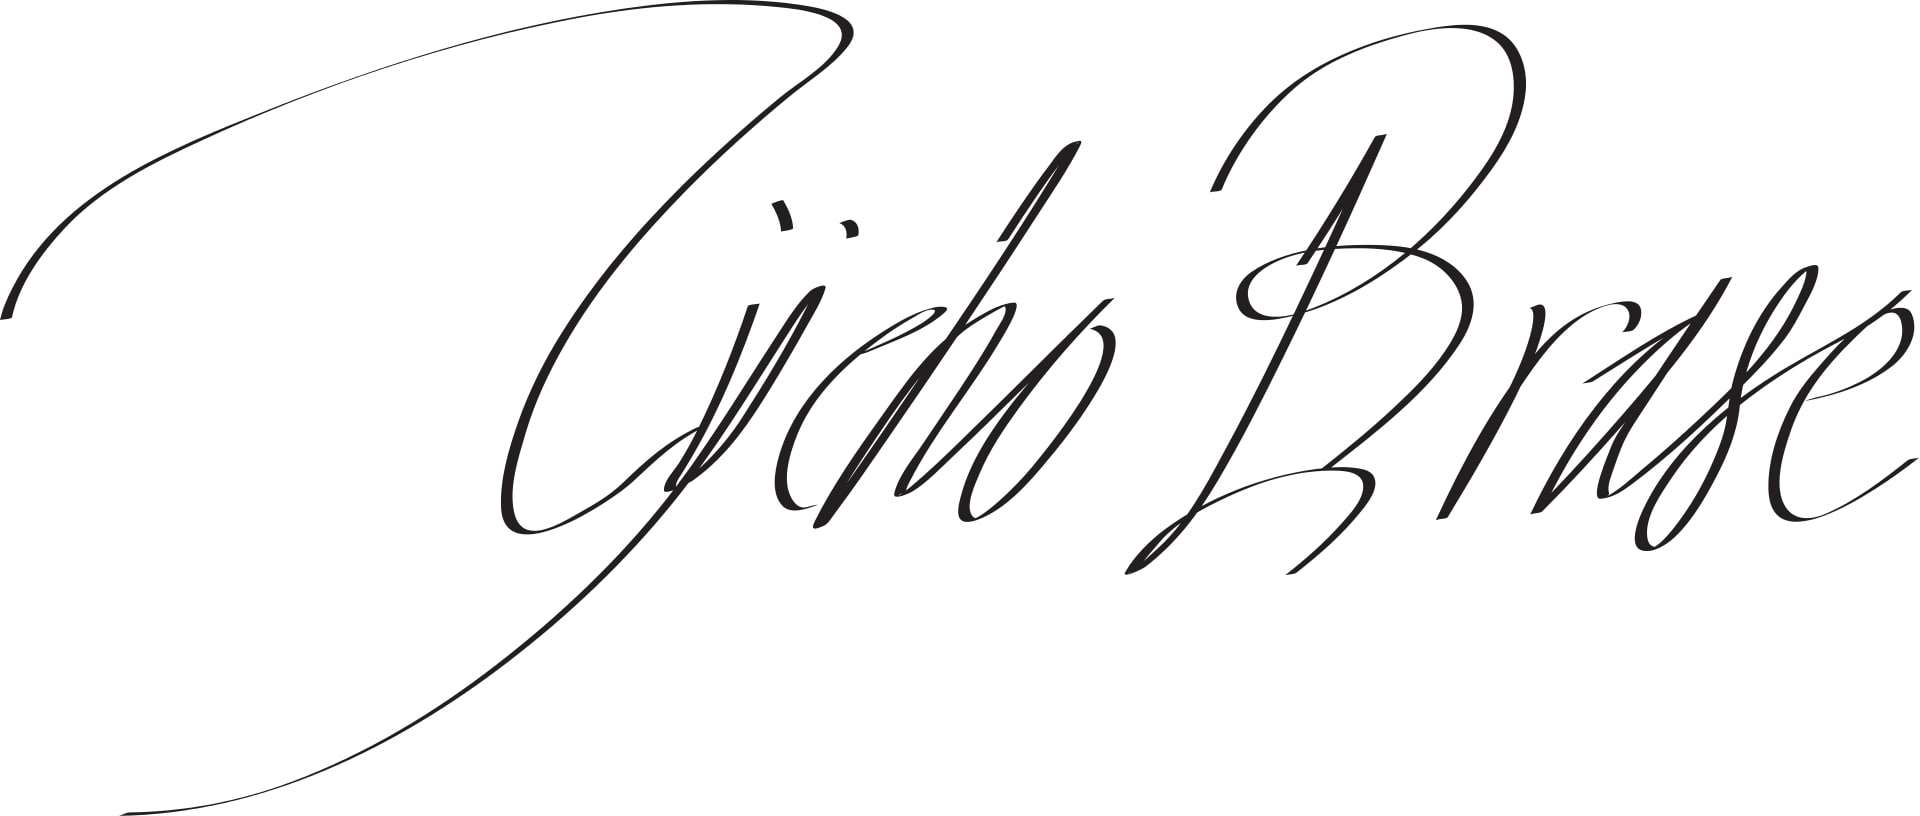 Tycho Brahe Signature